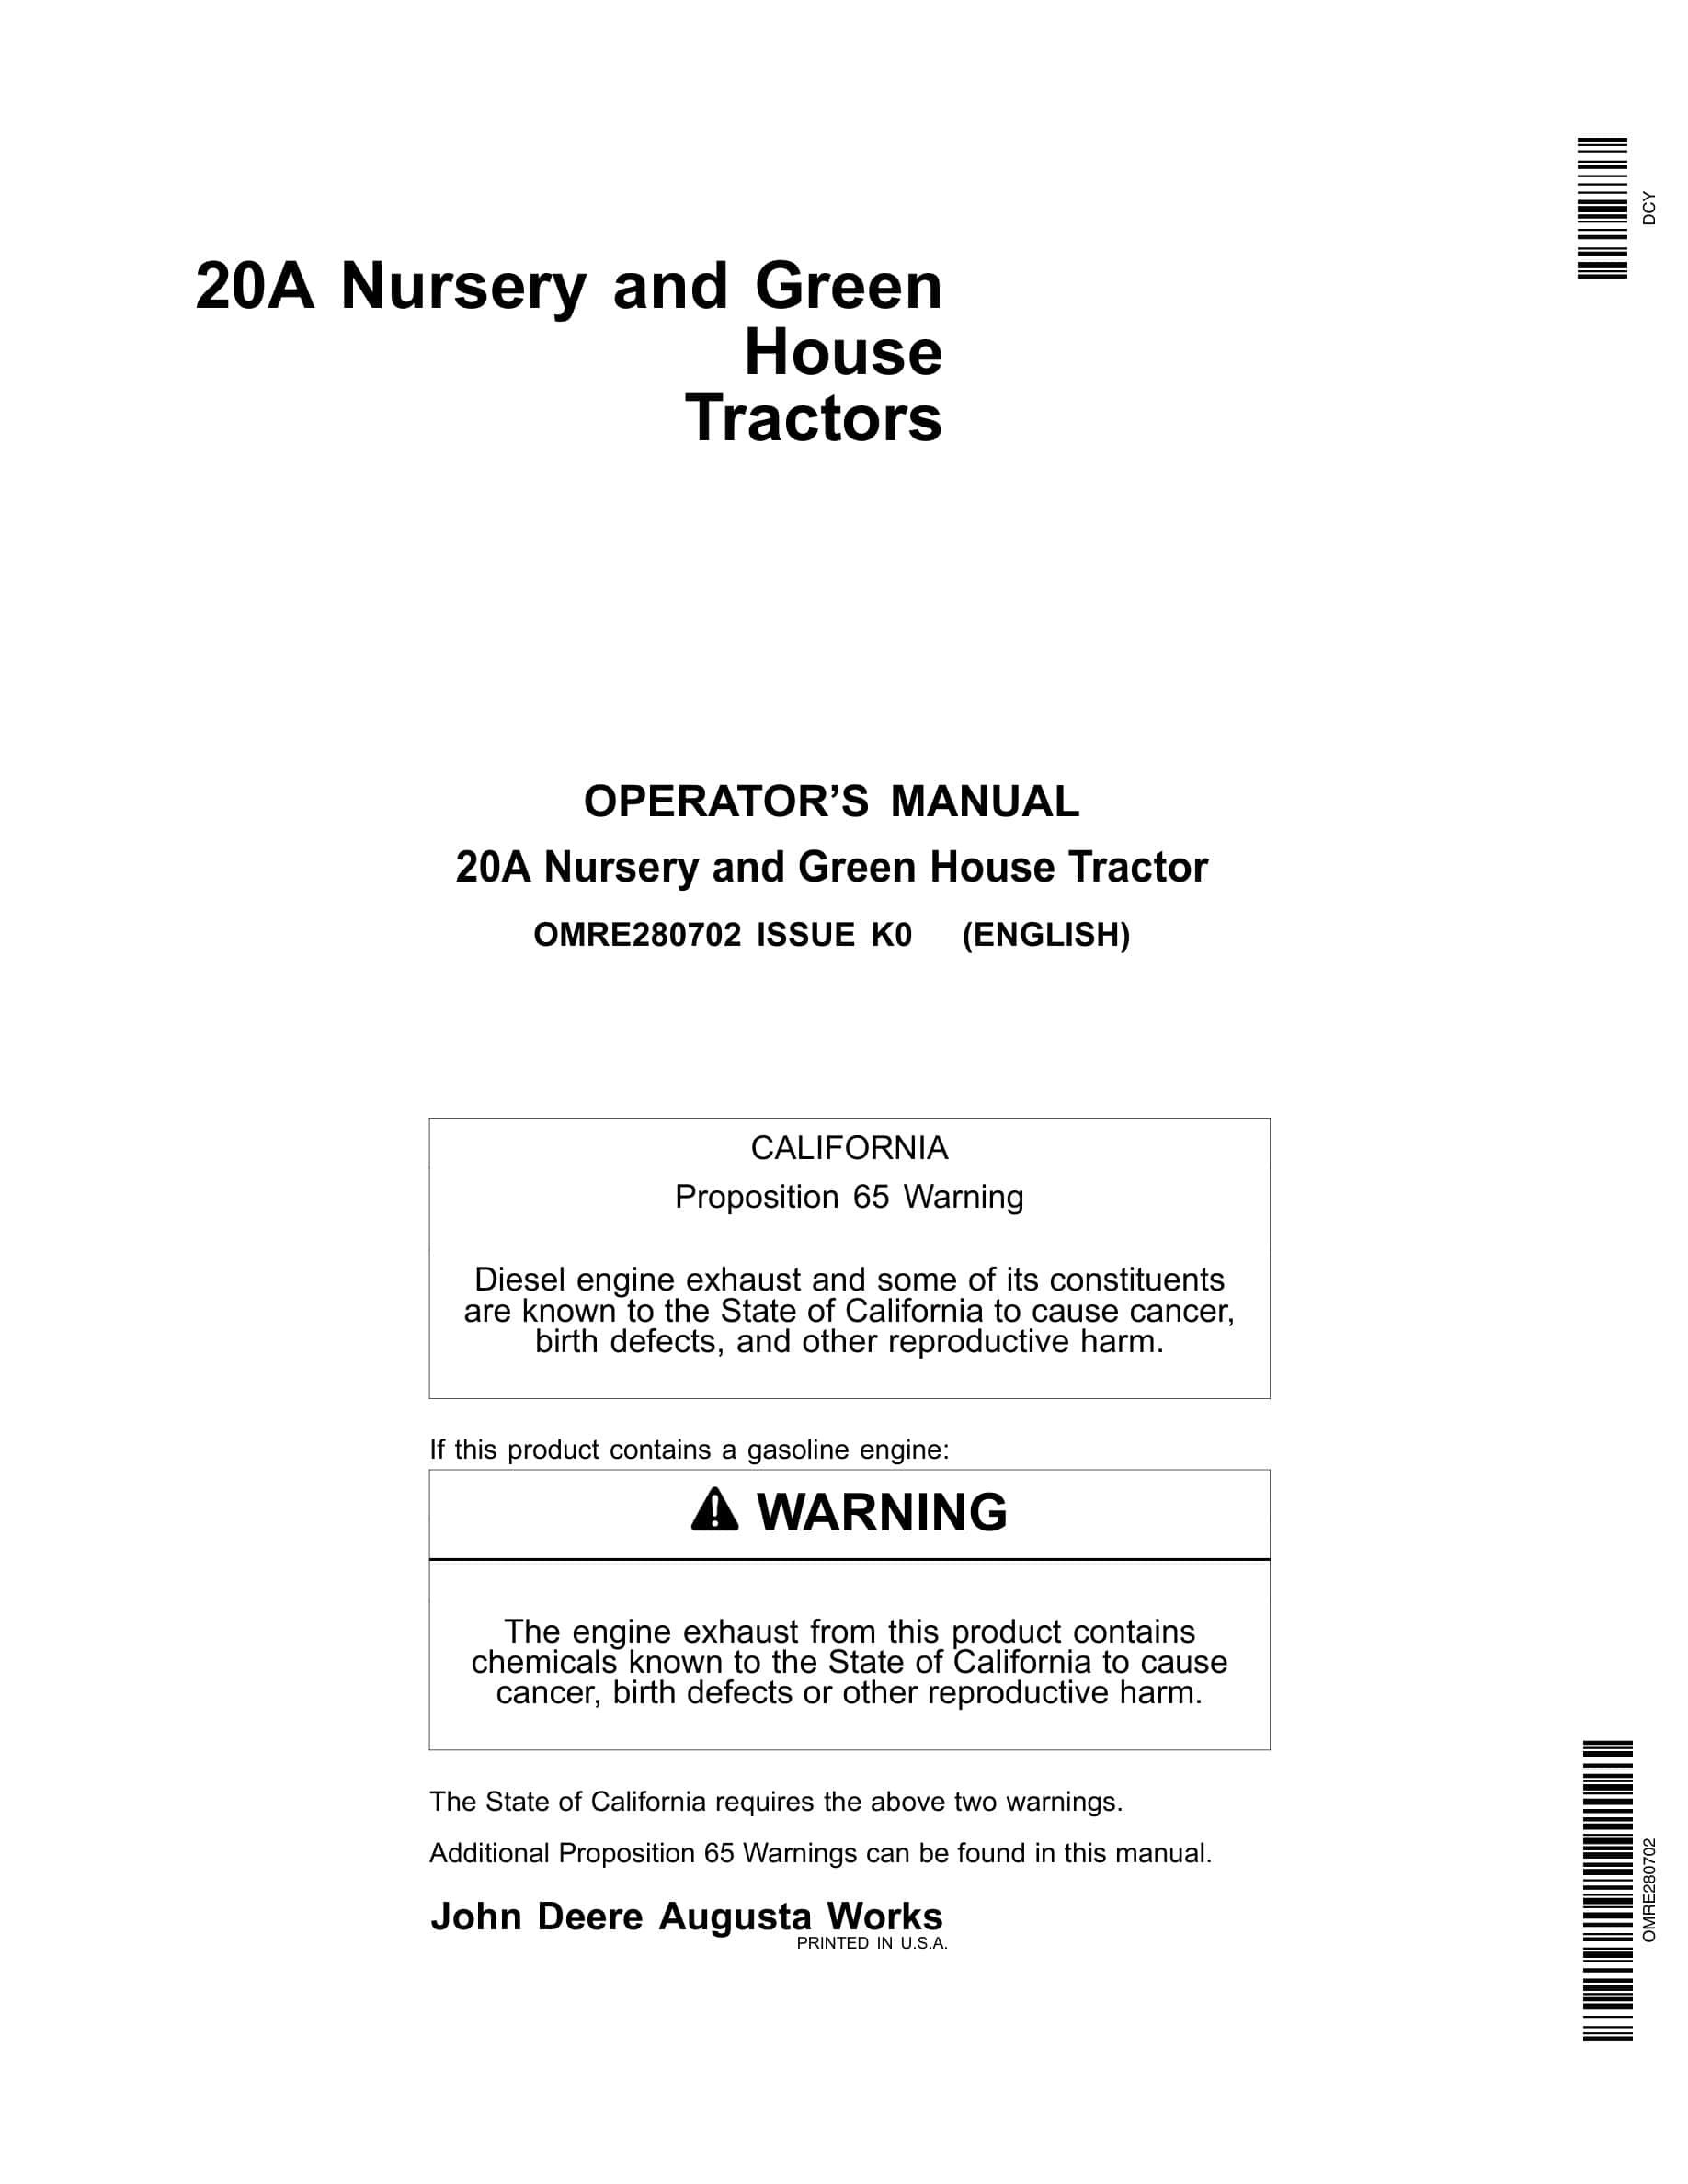 John Deere 20a Nursery And Green House Tractors Operator Manual OMRE280702-1